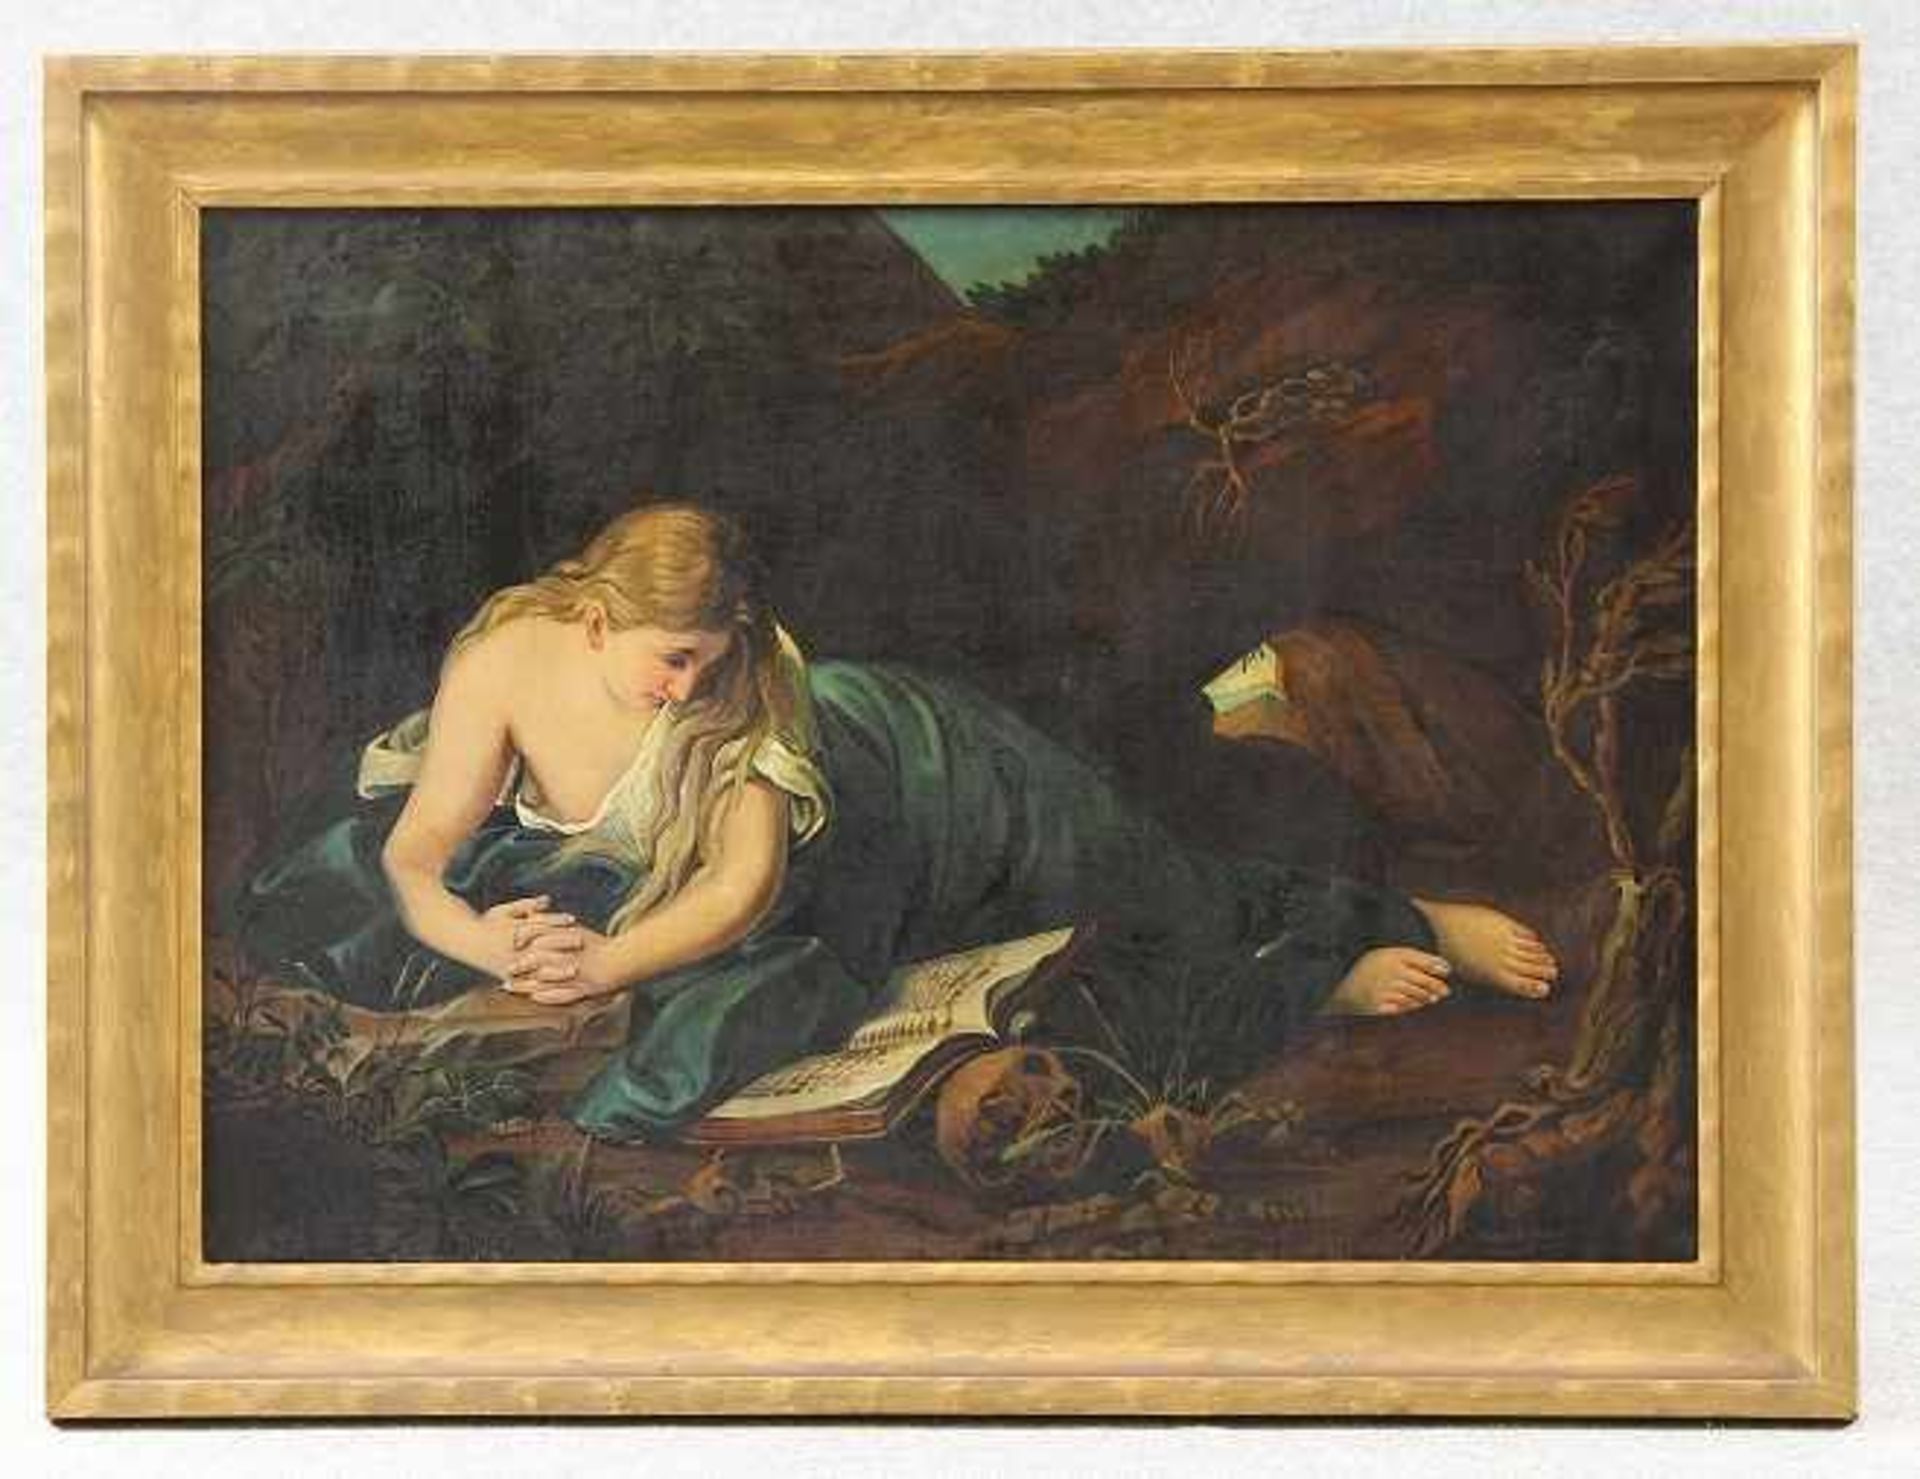 Batoni, Pompeo Girolamo (Lucca 1708-1787 Rom) nach Gemälde "Maria Magdalena", Öl auf Leinwand, die